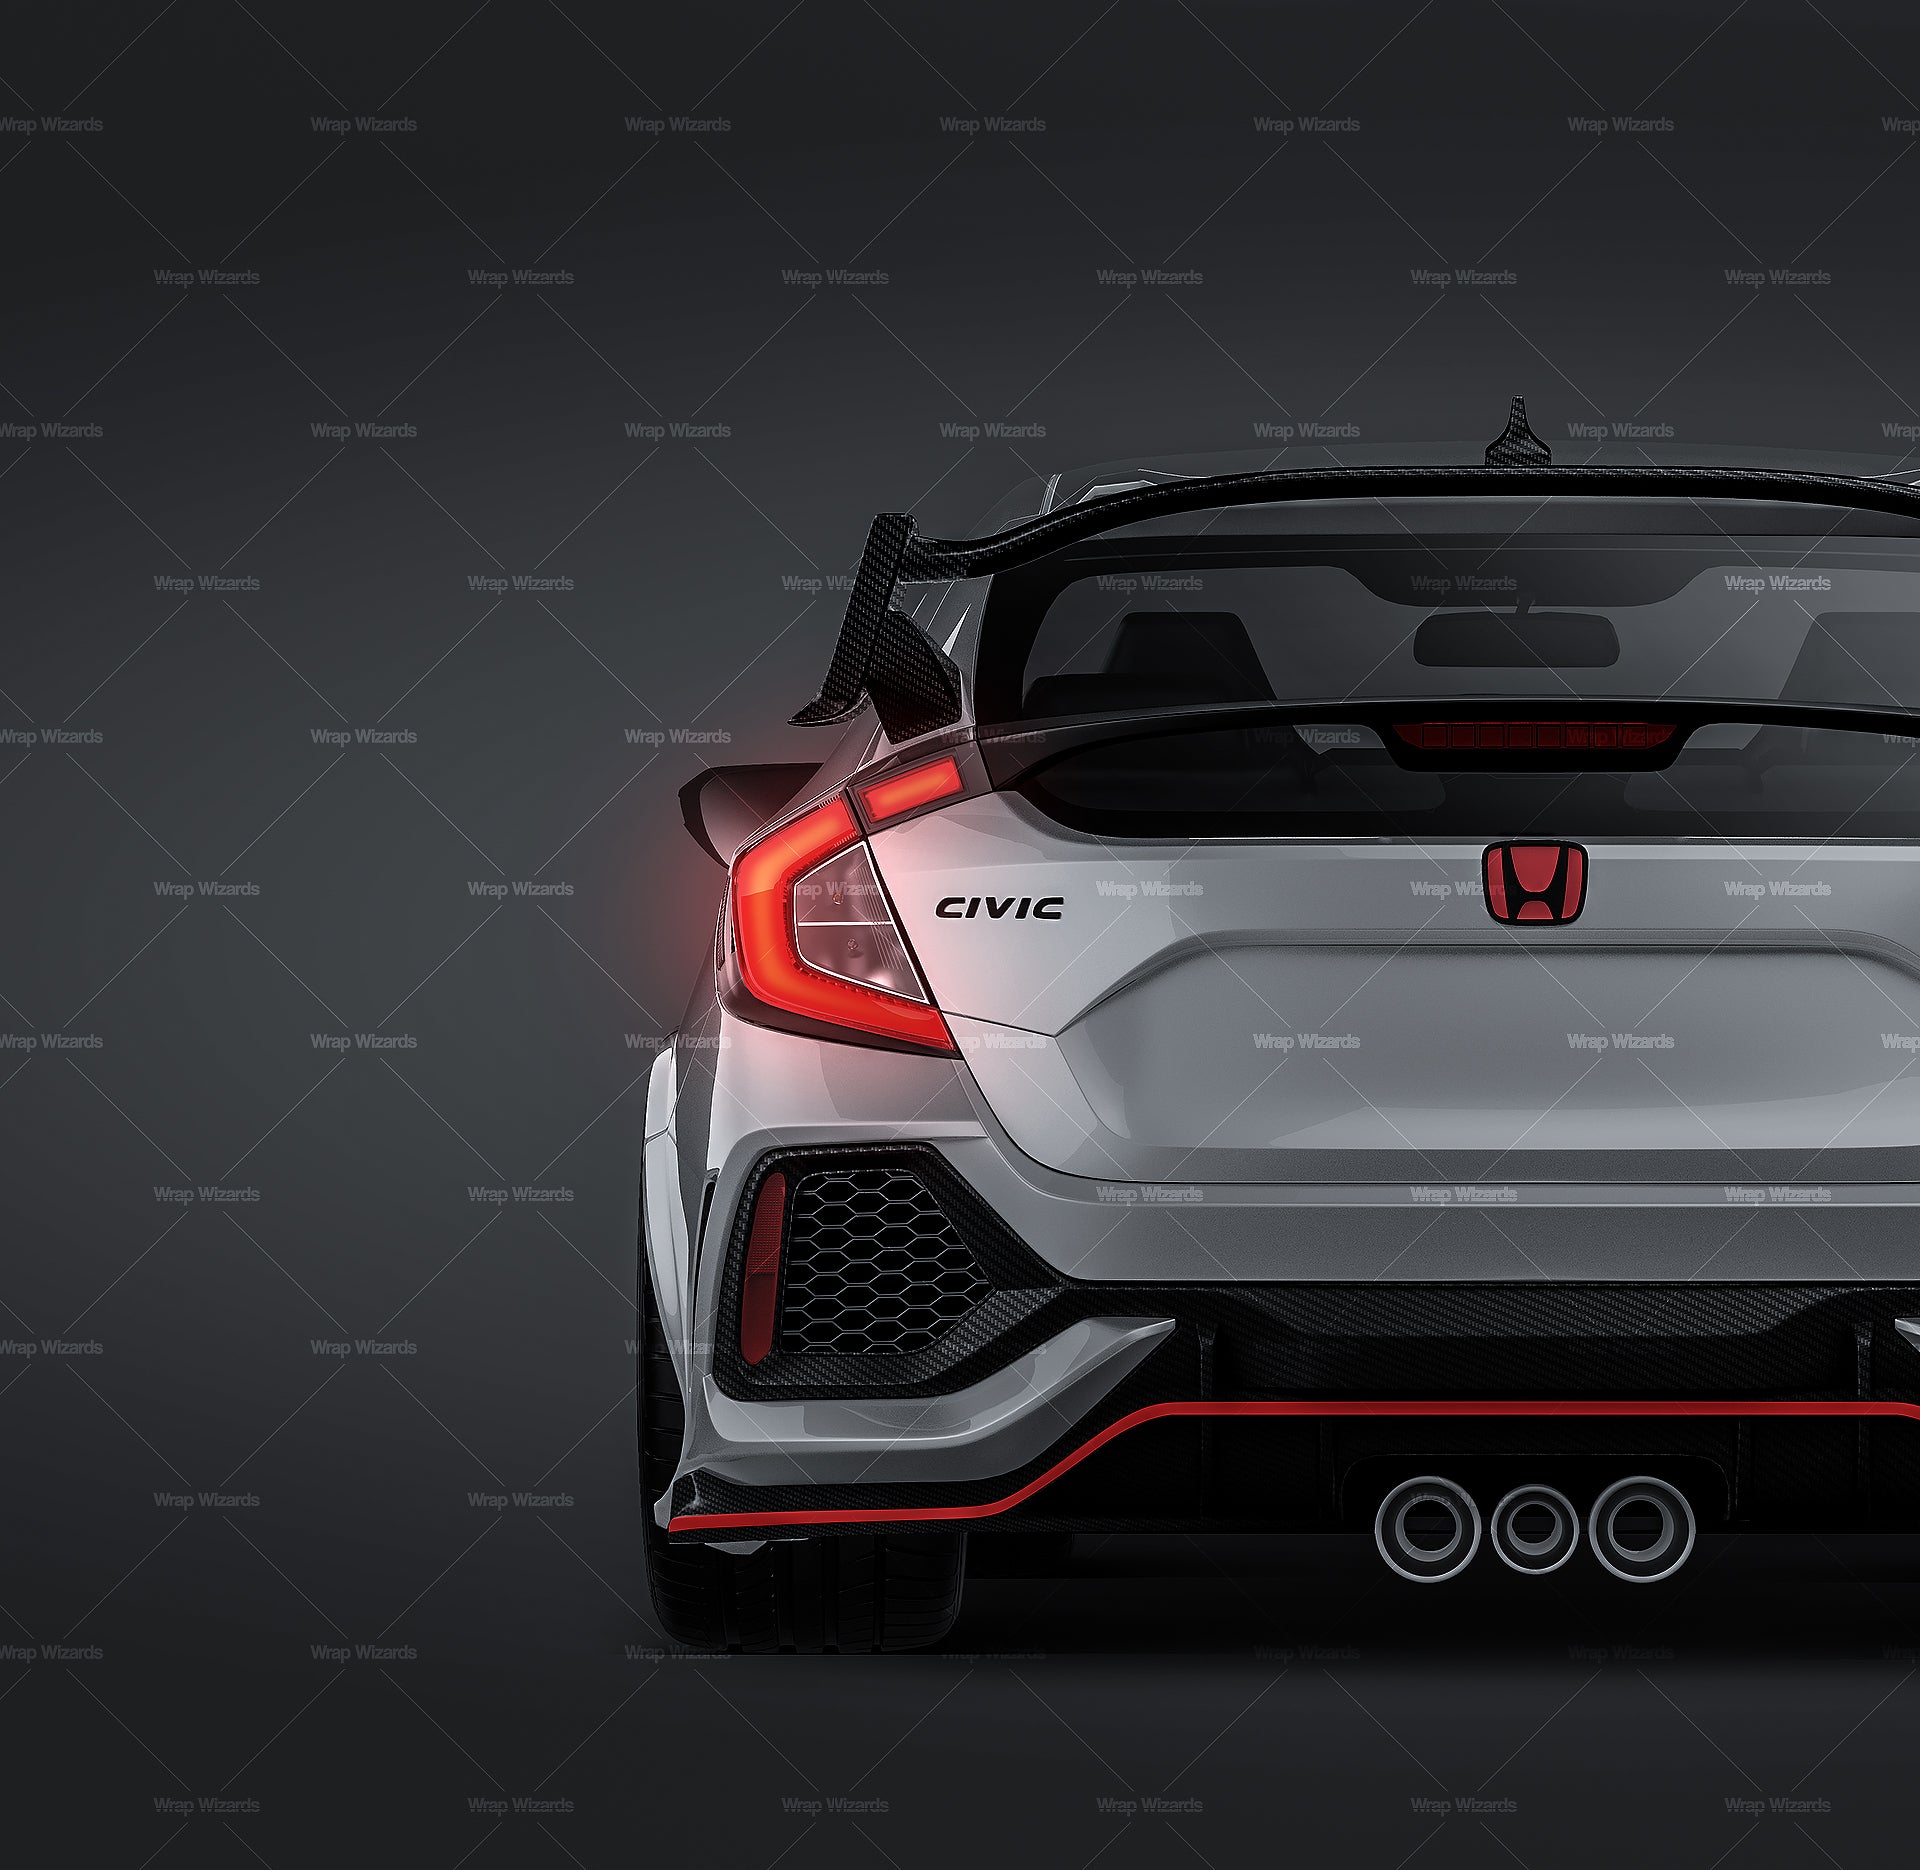 Honda Type-R 2019 glossy finish - all sides Car Mockup Template.psd